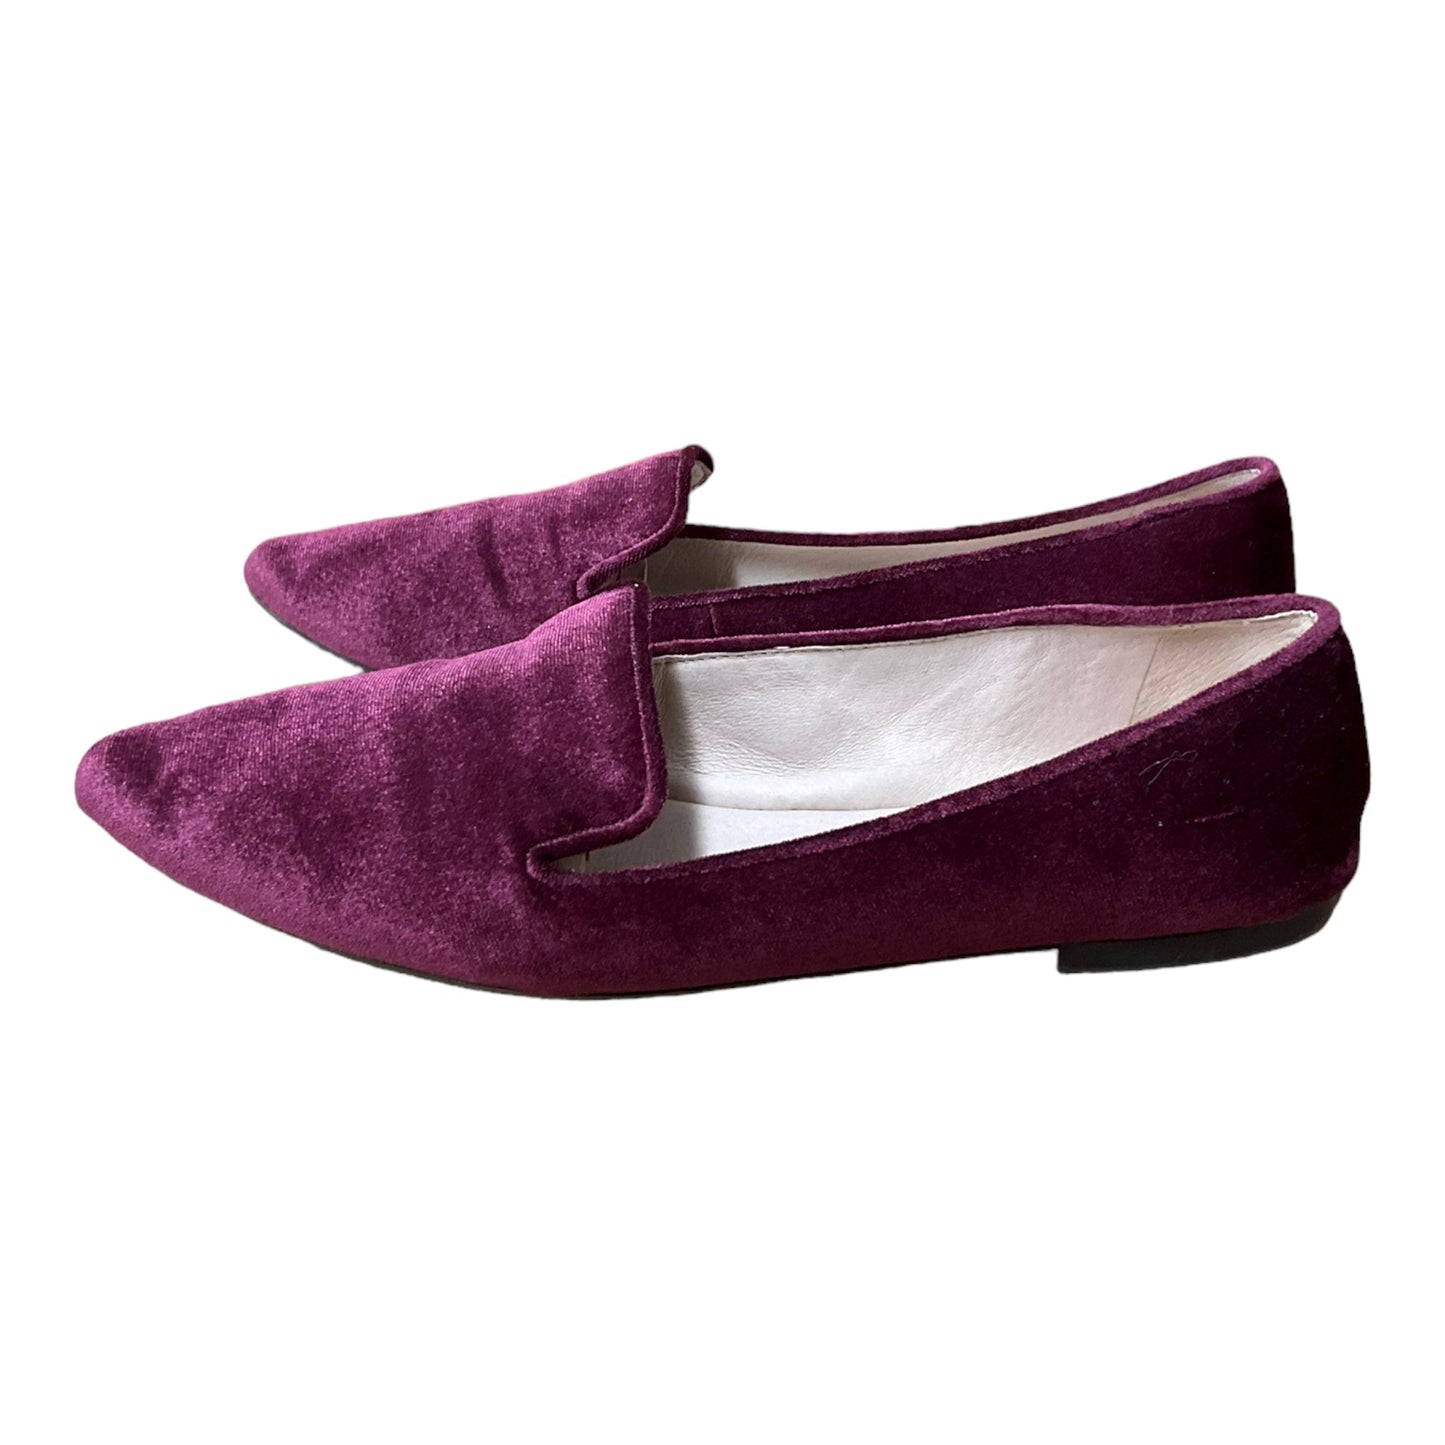 Shoes Flats Ballet By Giani Bernini  Size: 10